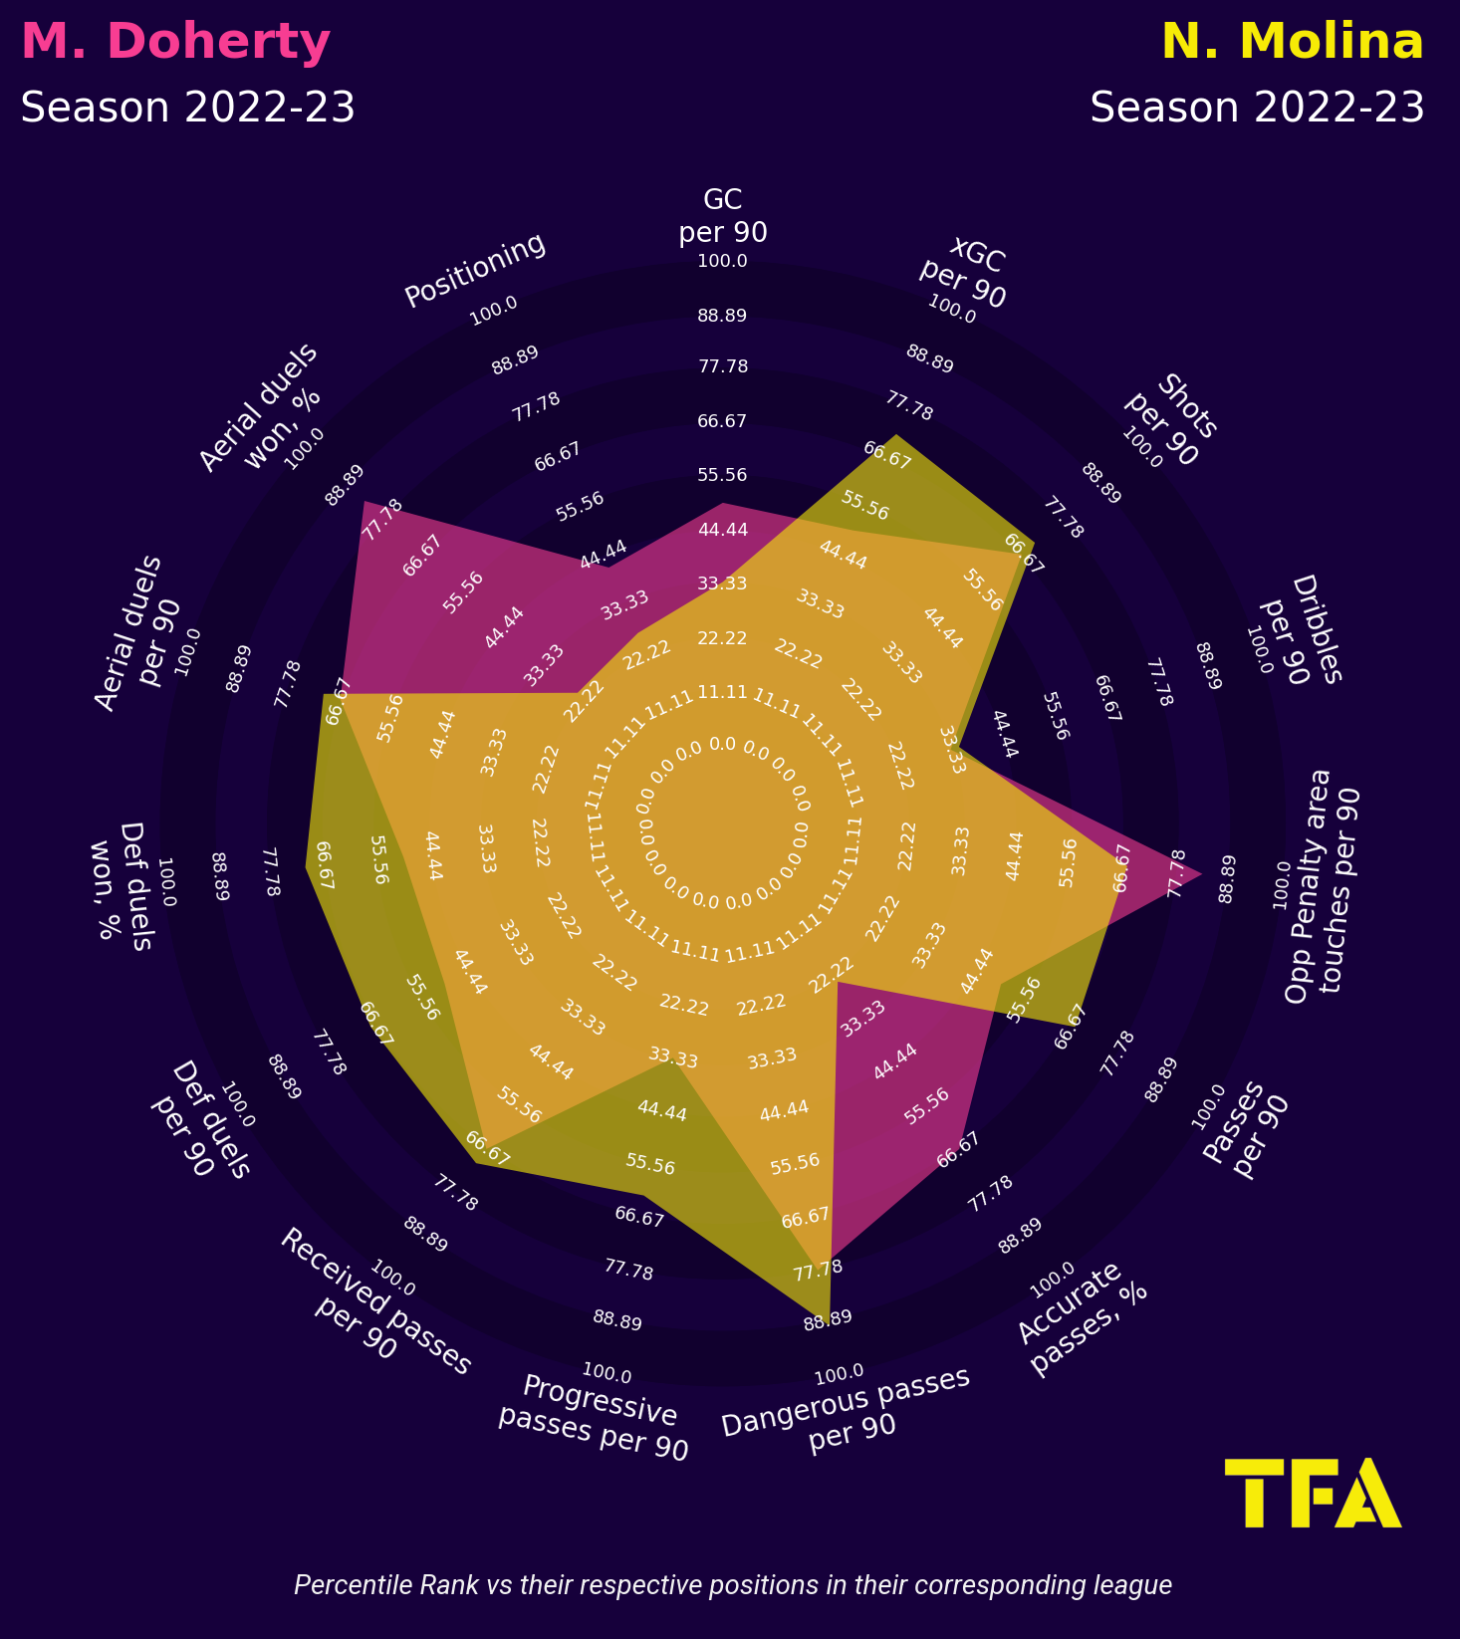 Matt Doherty: Atletico Madrid La Liga 2022/23 data, statistics, analysis and scouting report